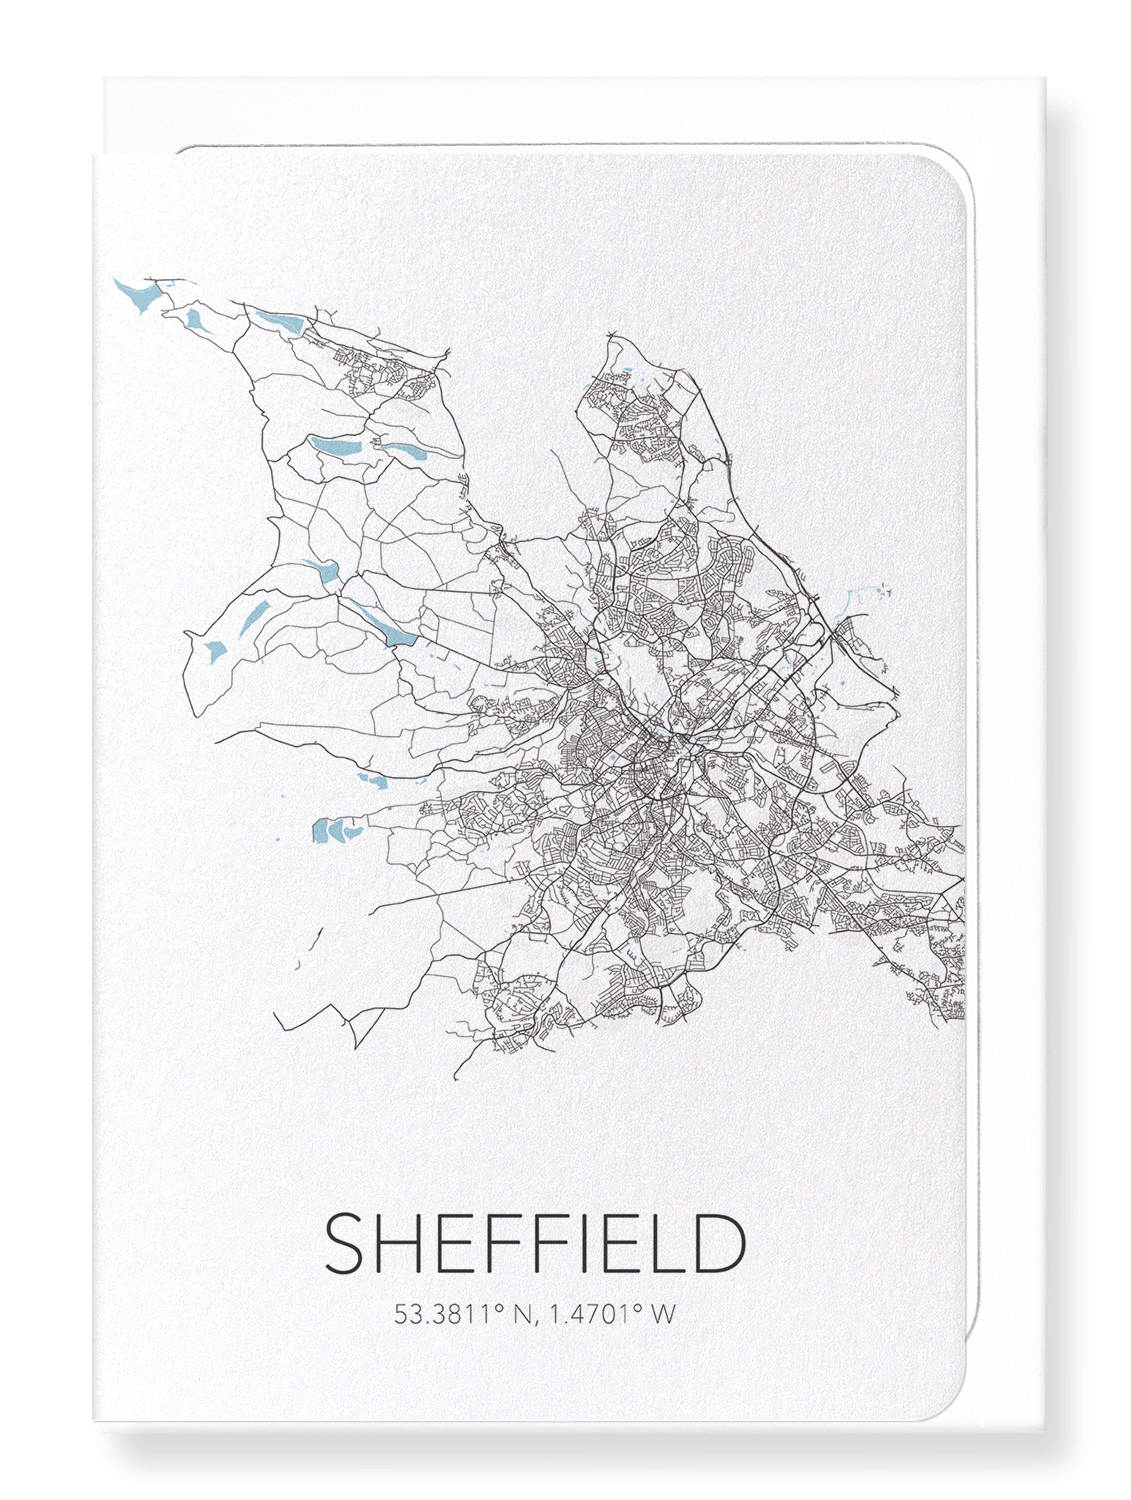 SHEFFIELD CUTOUT: Map Cutout Greeting Card